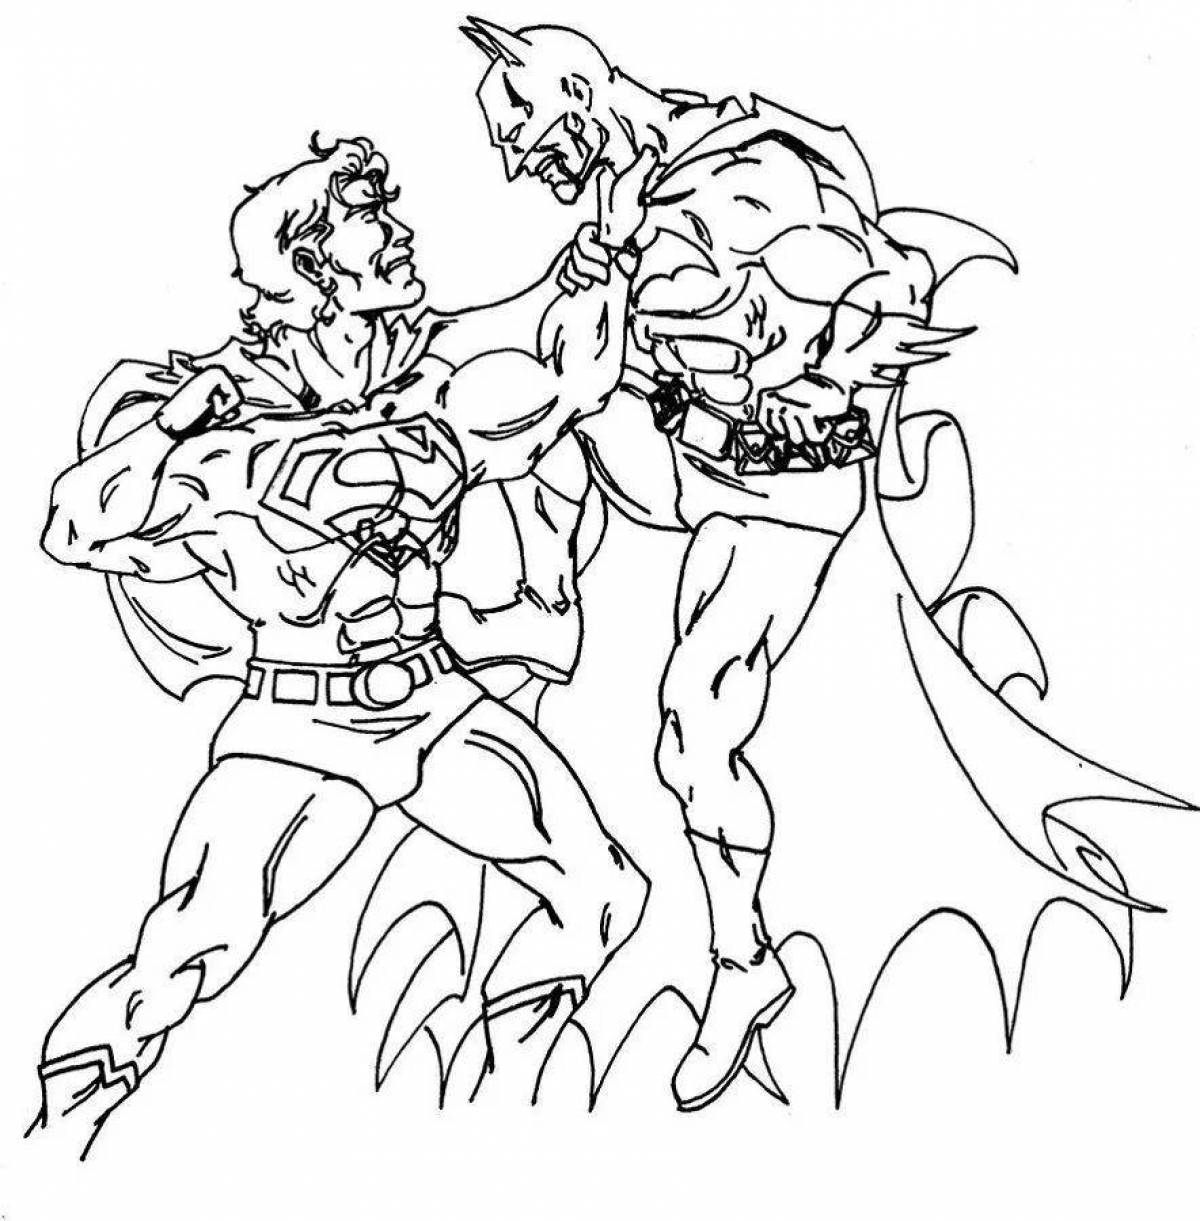 Fabulous superman and batman coloring page